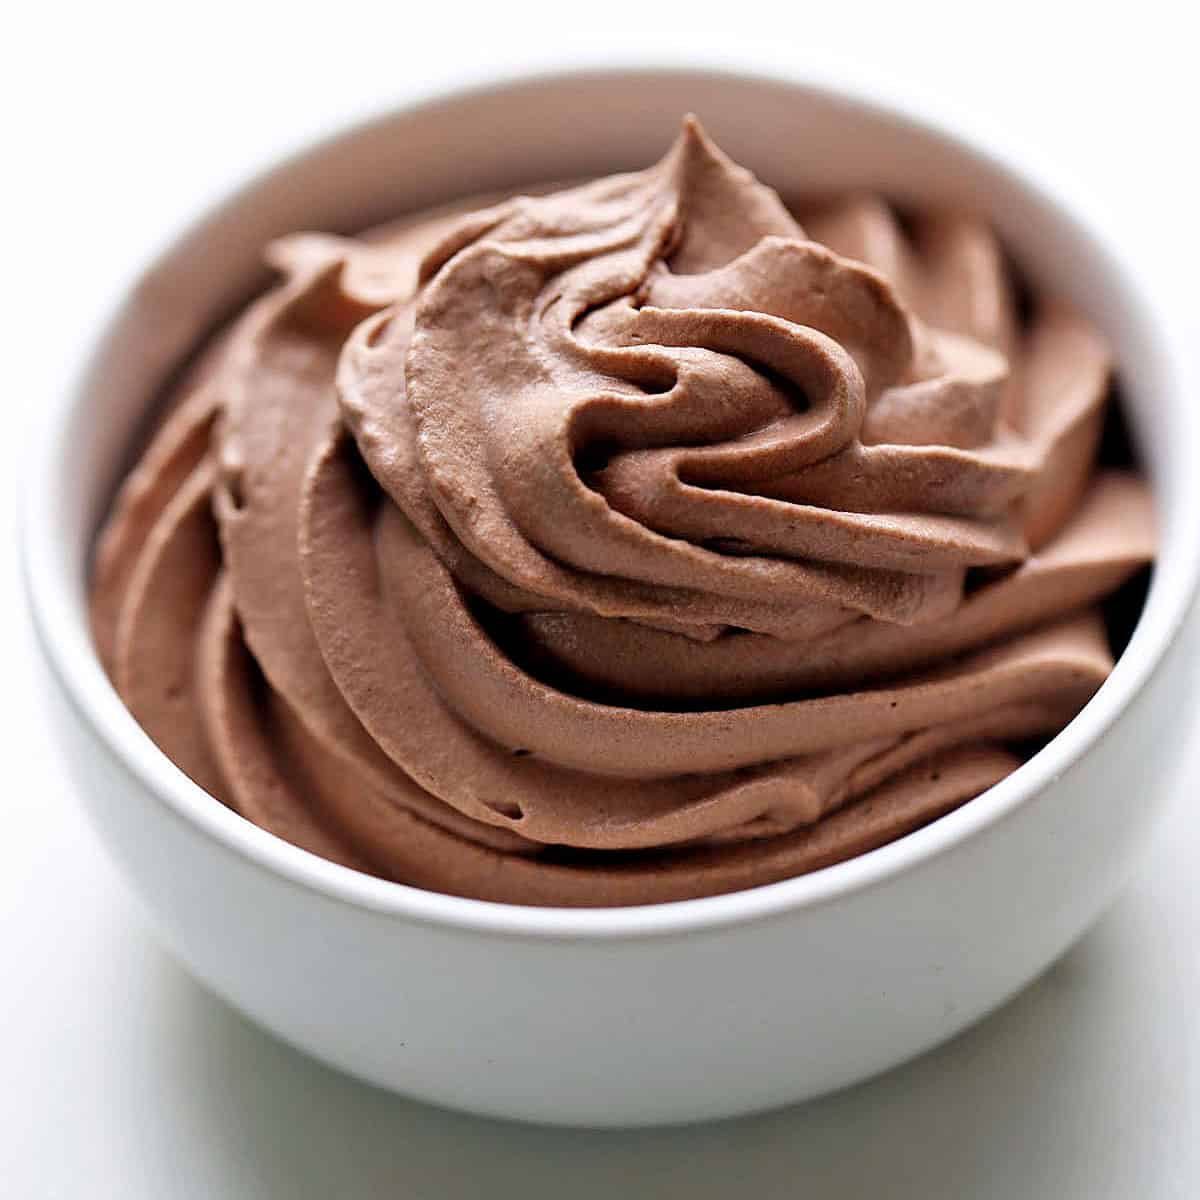 https://healthyrecipesblogs.com/wp-content/uploads/2017/03/Chocolate-Whipped-Cream-Featured-2021.jpg